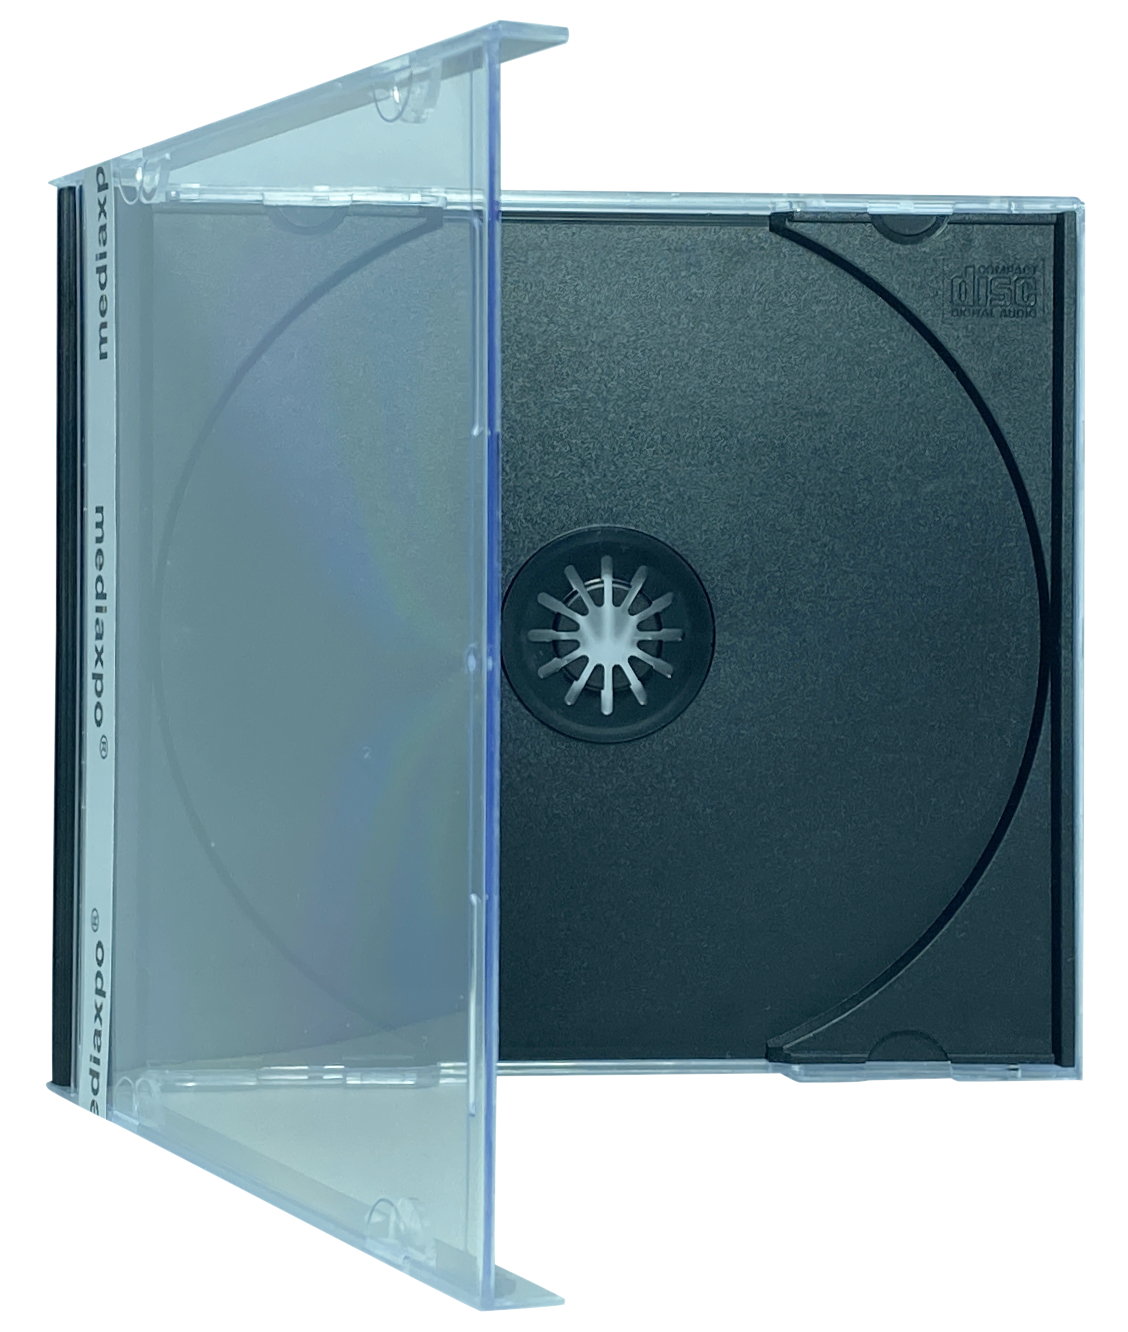 Generic 400 STANDARD Black CD Jewel Case